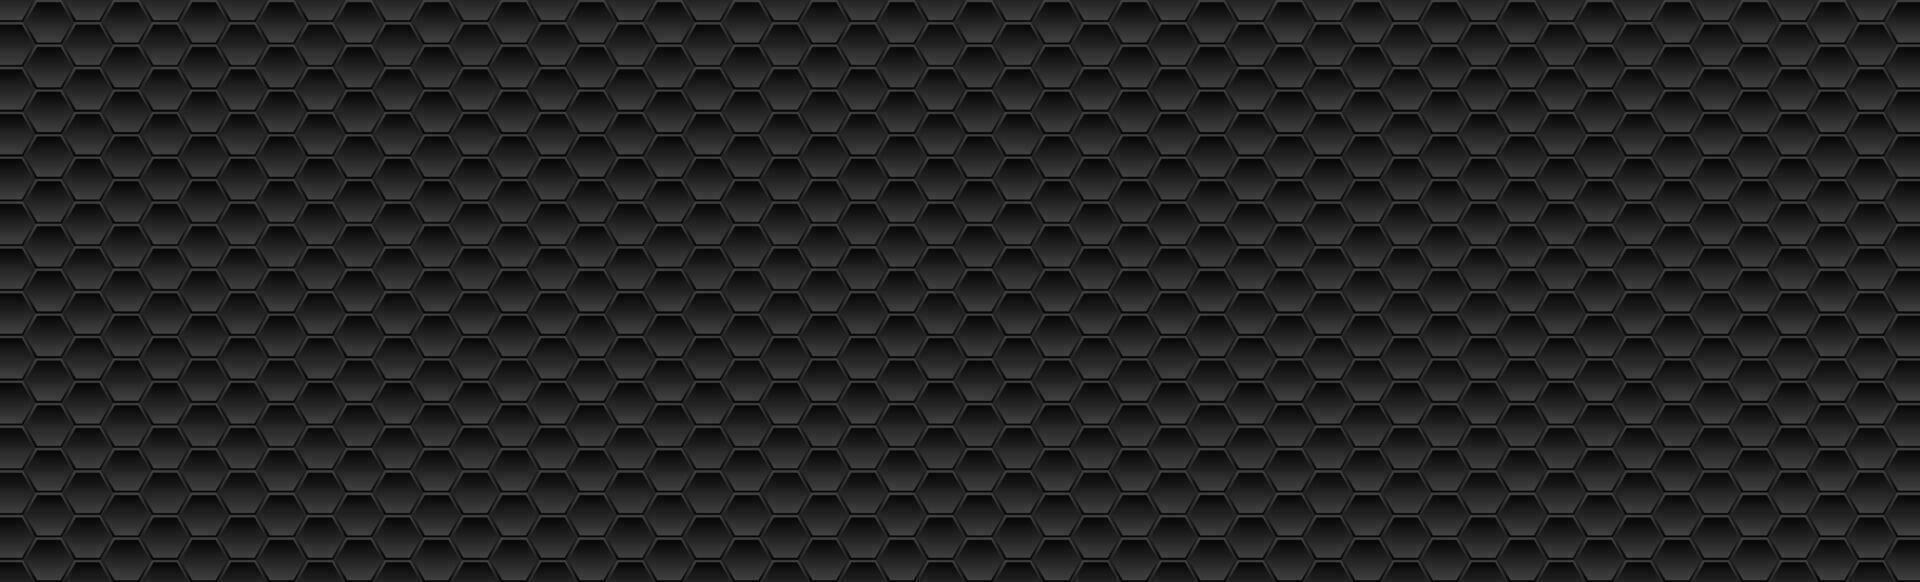 Black hexagonal texture abstract technology background vector